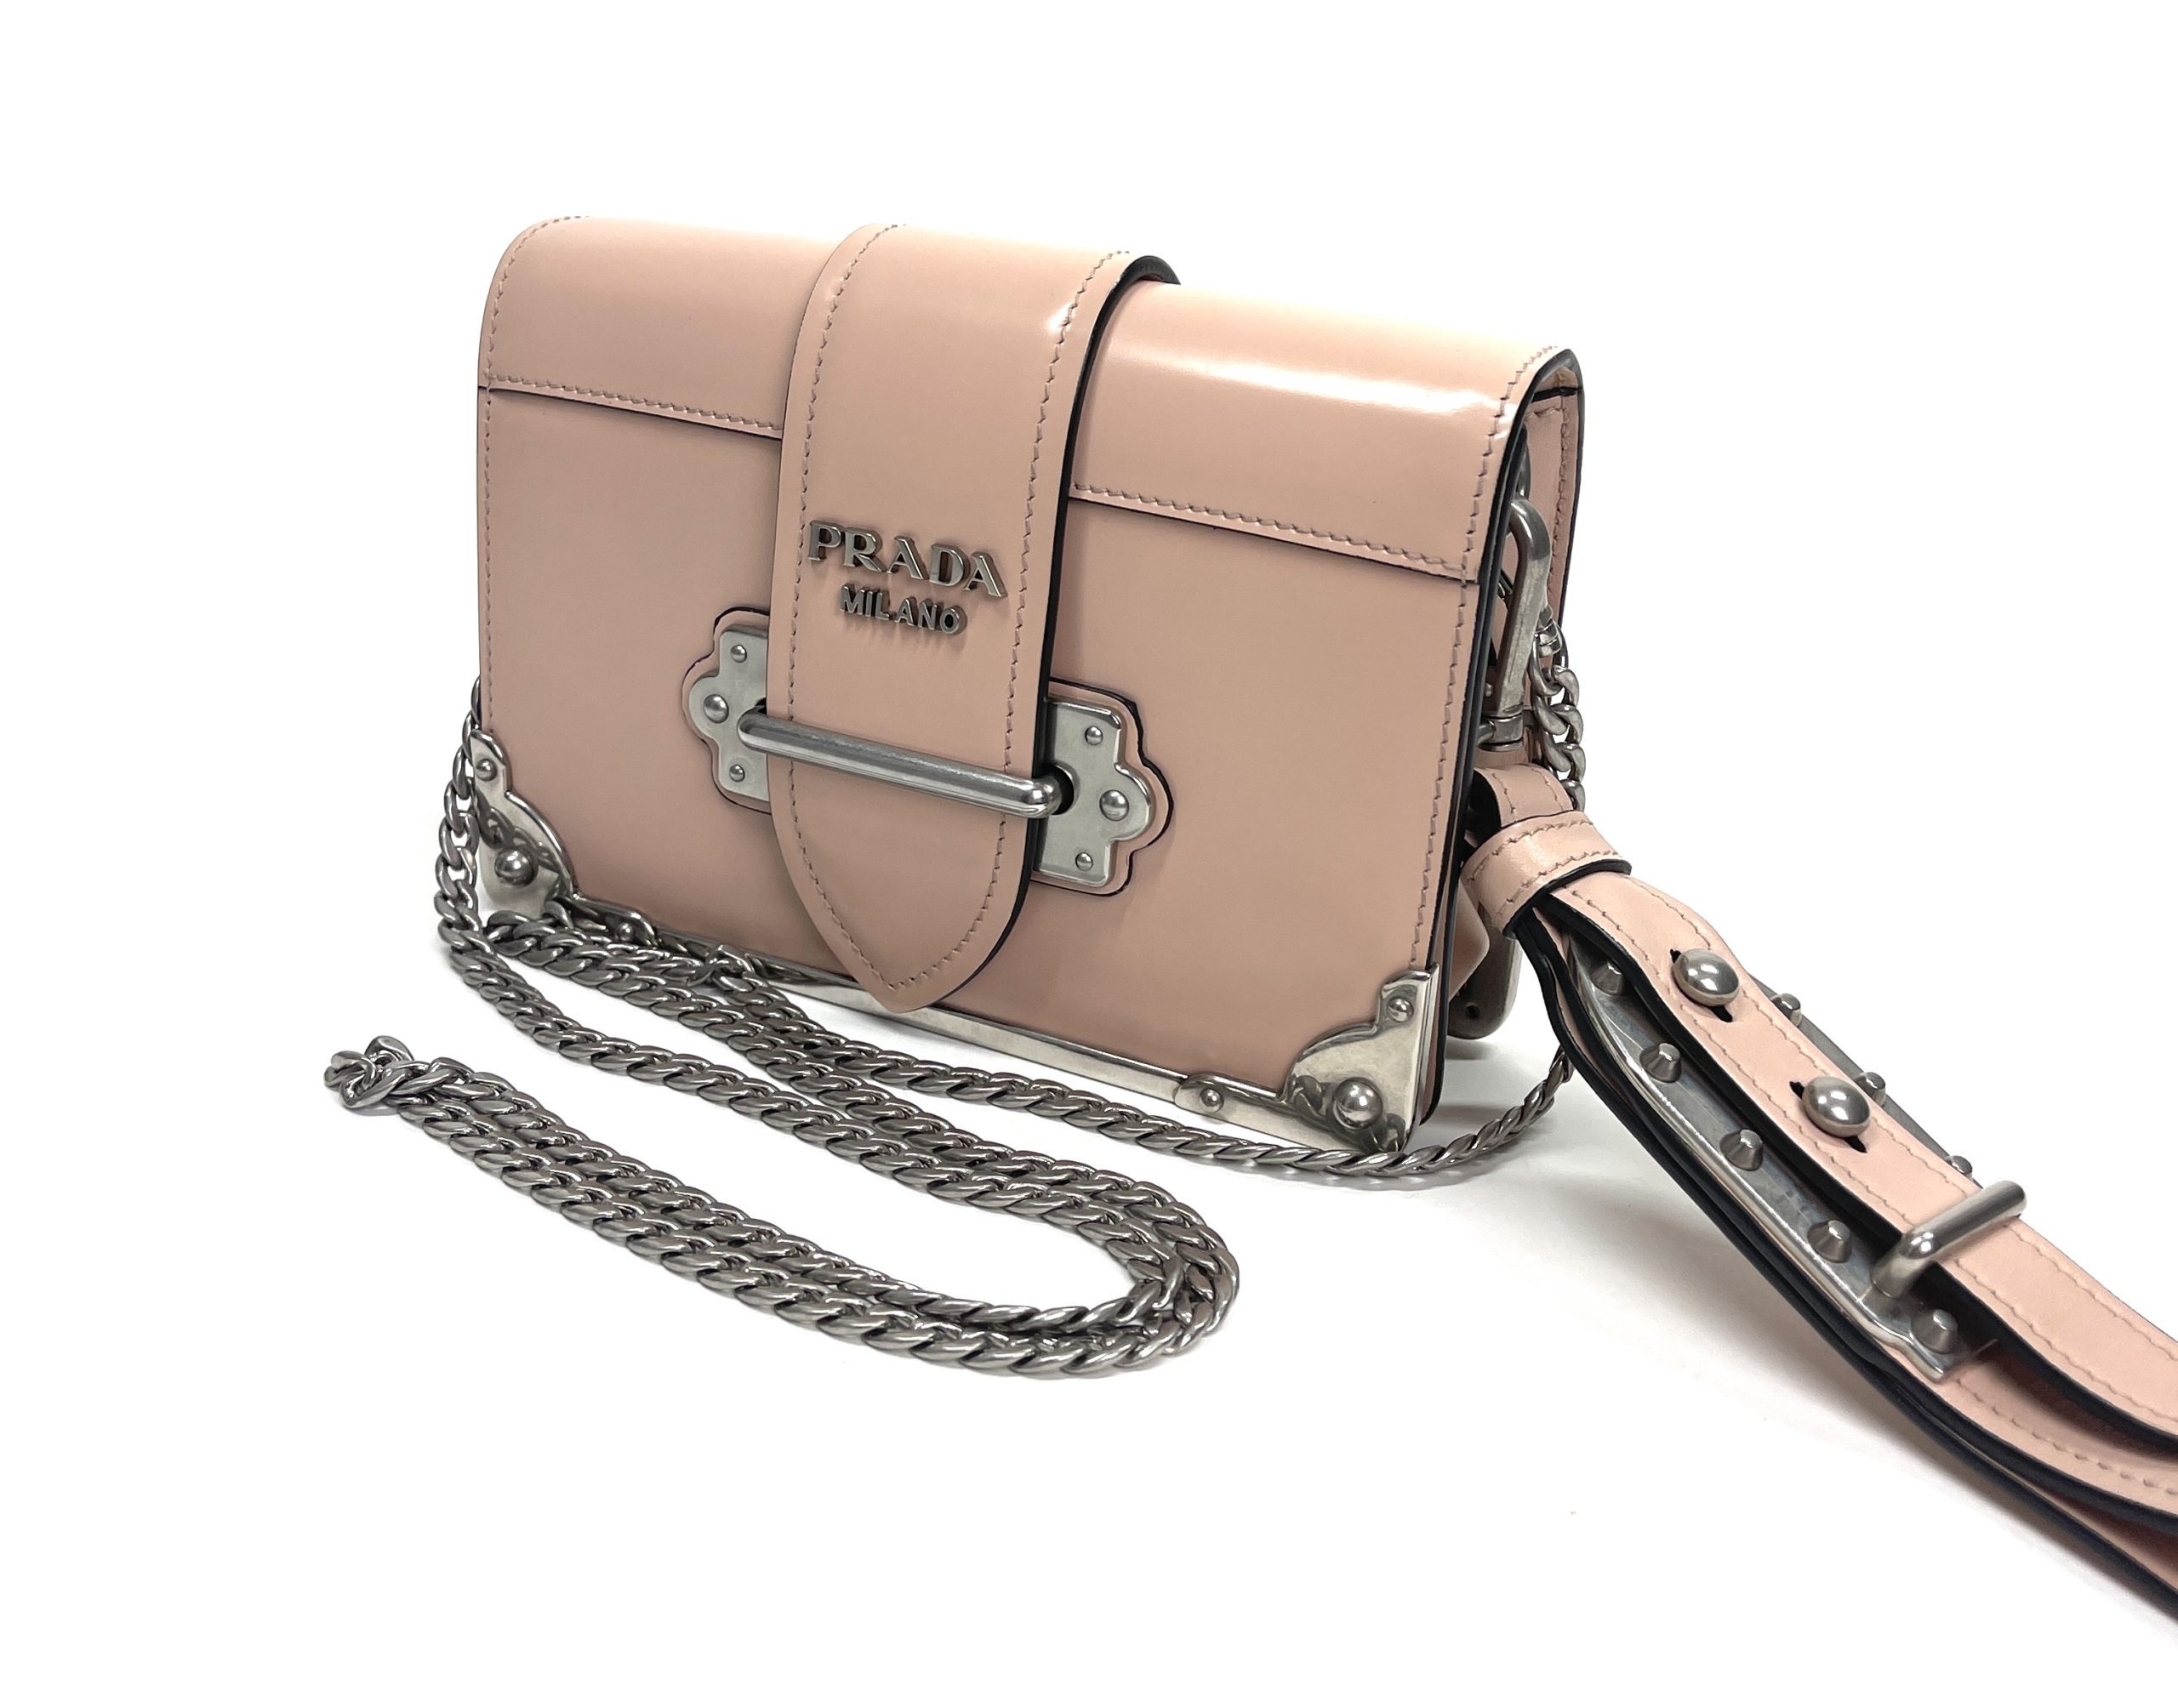 Prada Micro Spazzolato Cahier Crossbody Bag, Prada Handbags